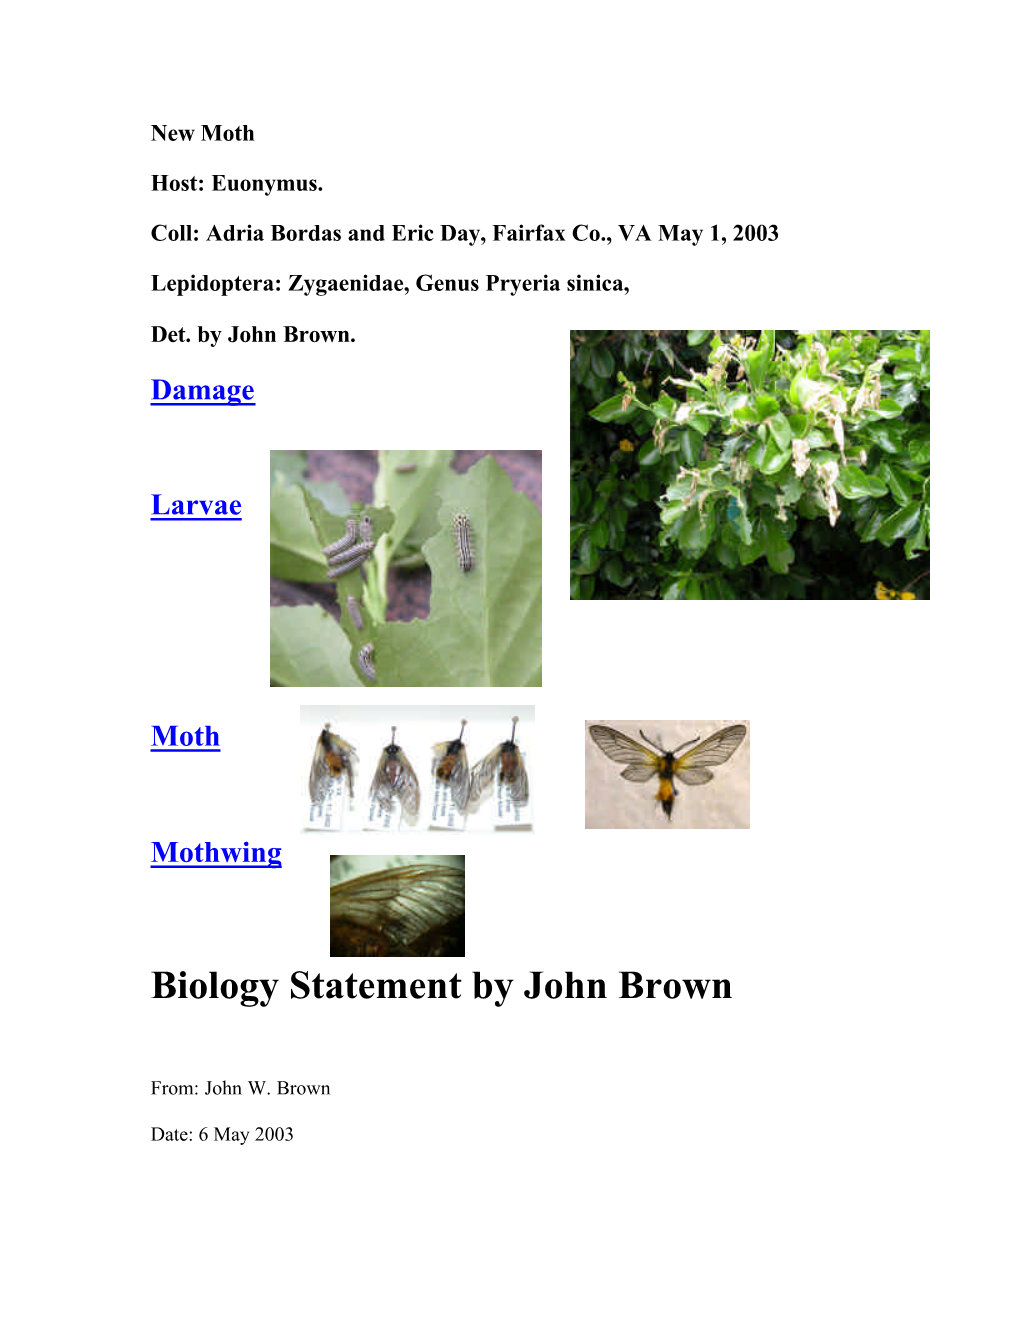 Biology Statement by John Brown